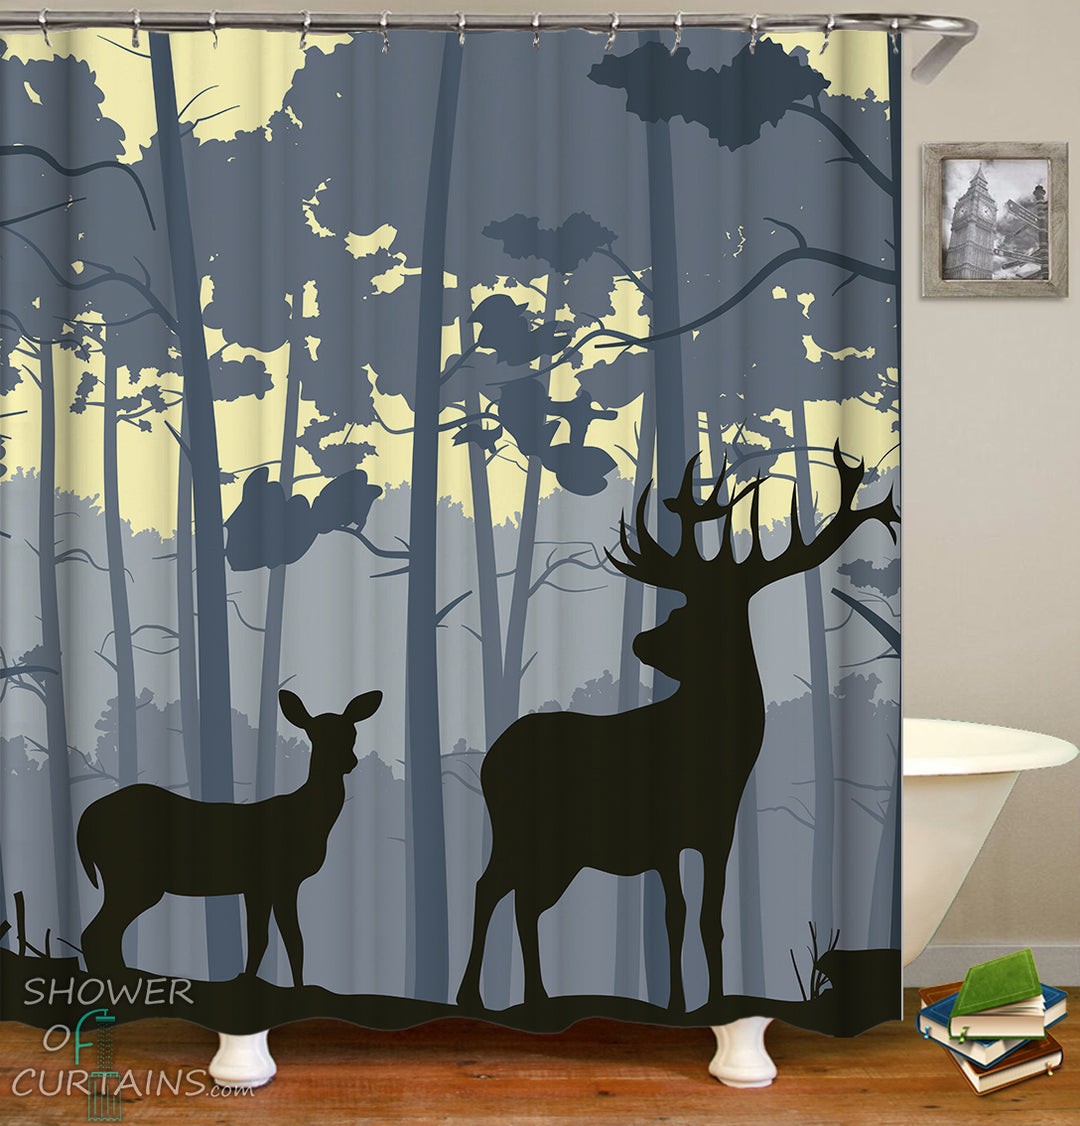 Wildlife Shower Curtains - Huntters Bathroom